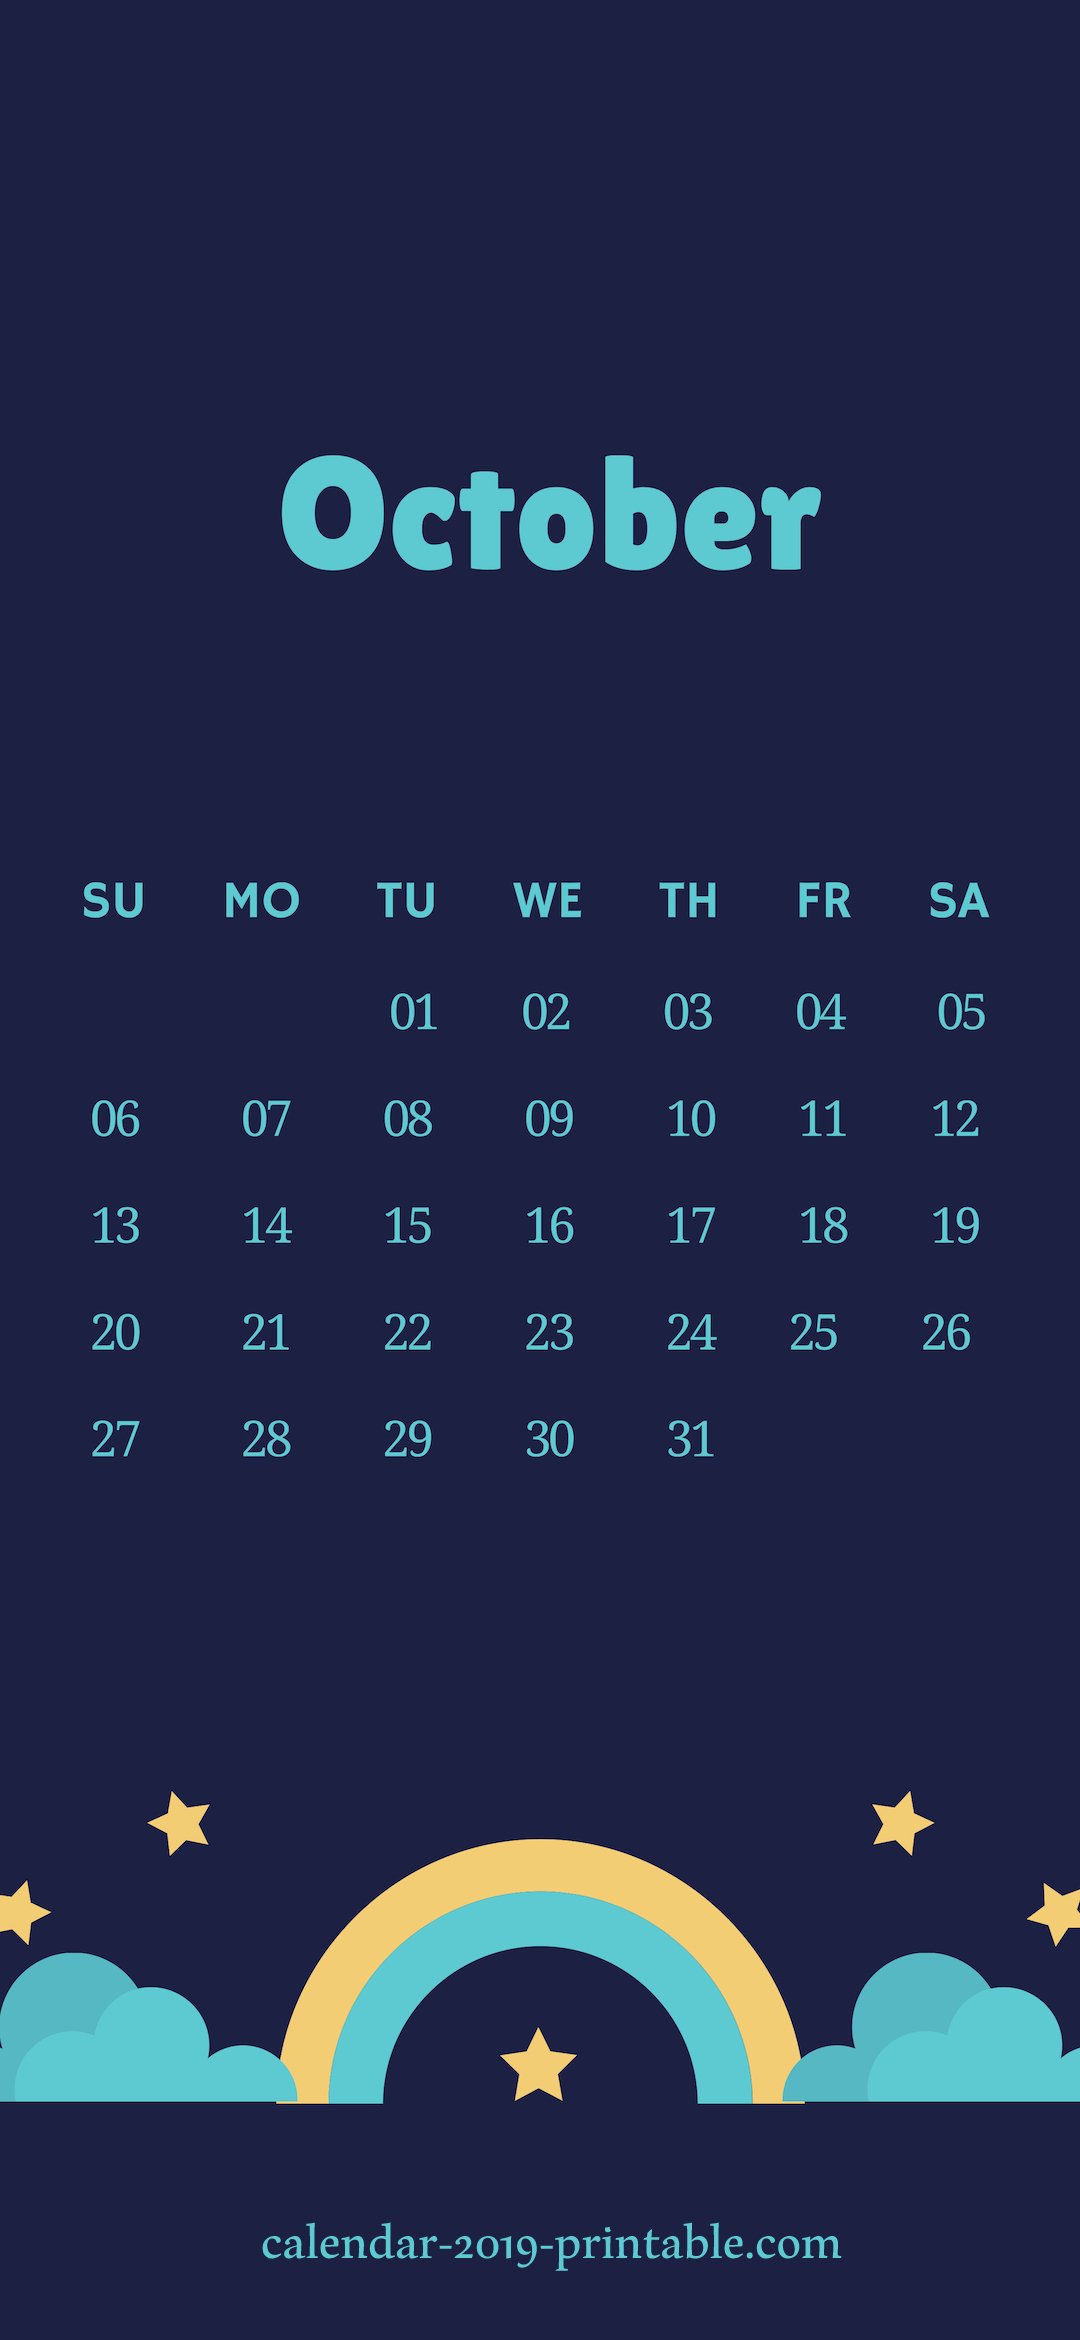 October 2019 Iphone Calendar - HD Wallpaper 